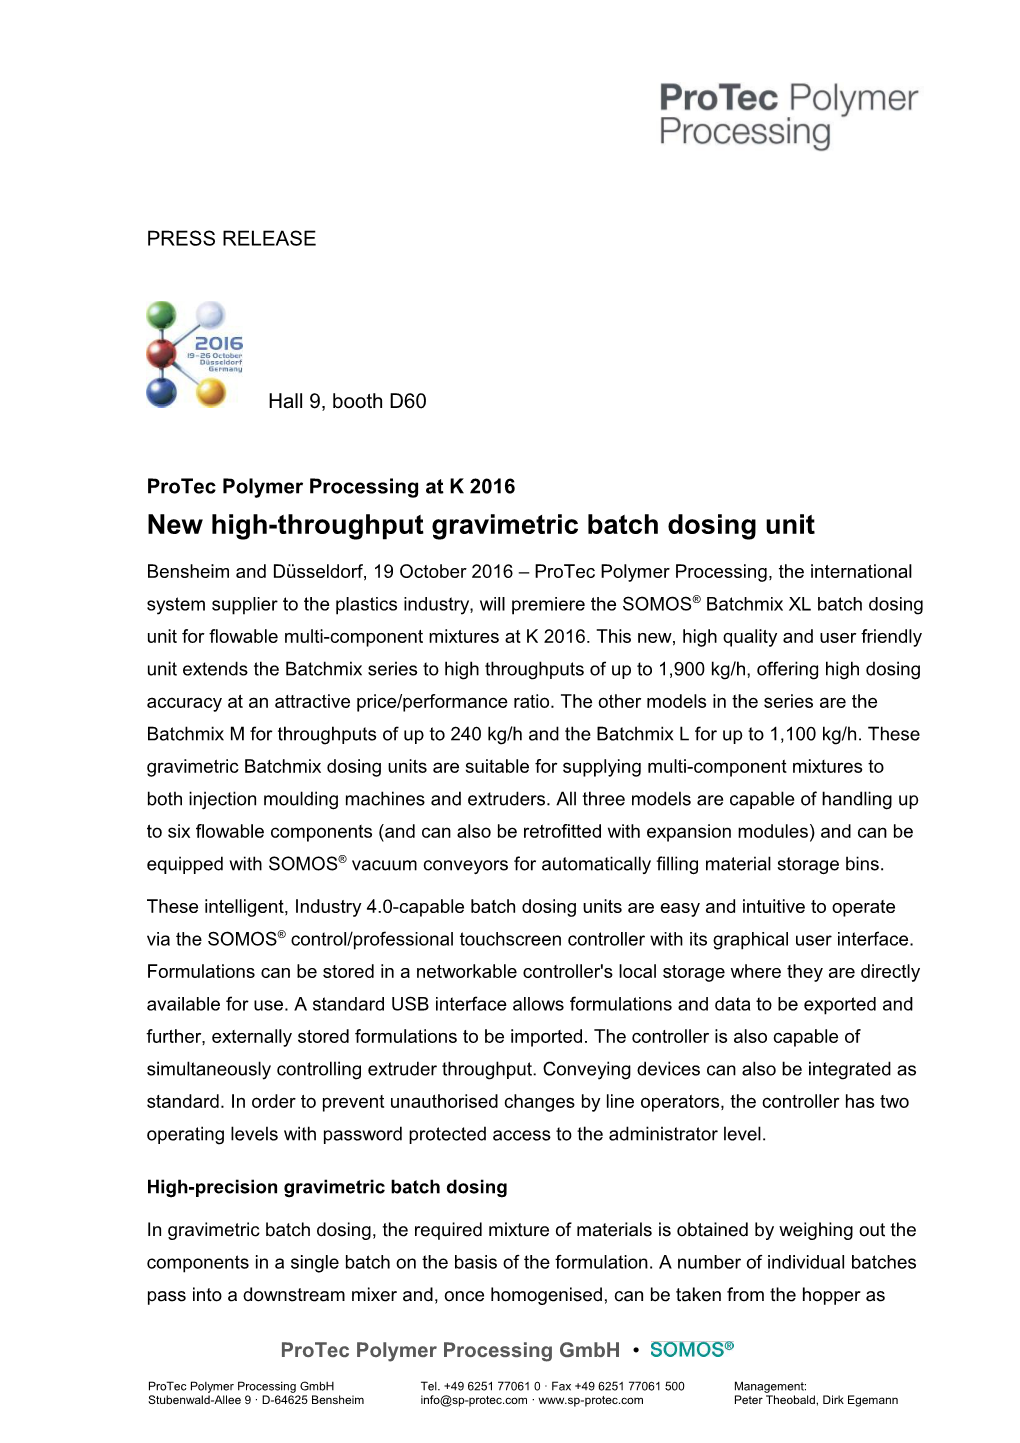 Page 1 of Press Release: New High-Throughput Gravimetric Batch Dosing Unit